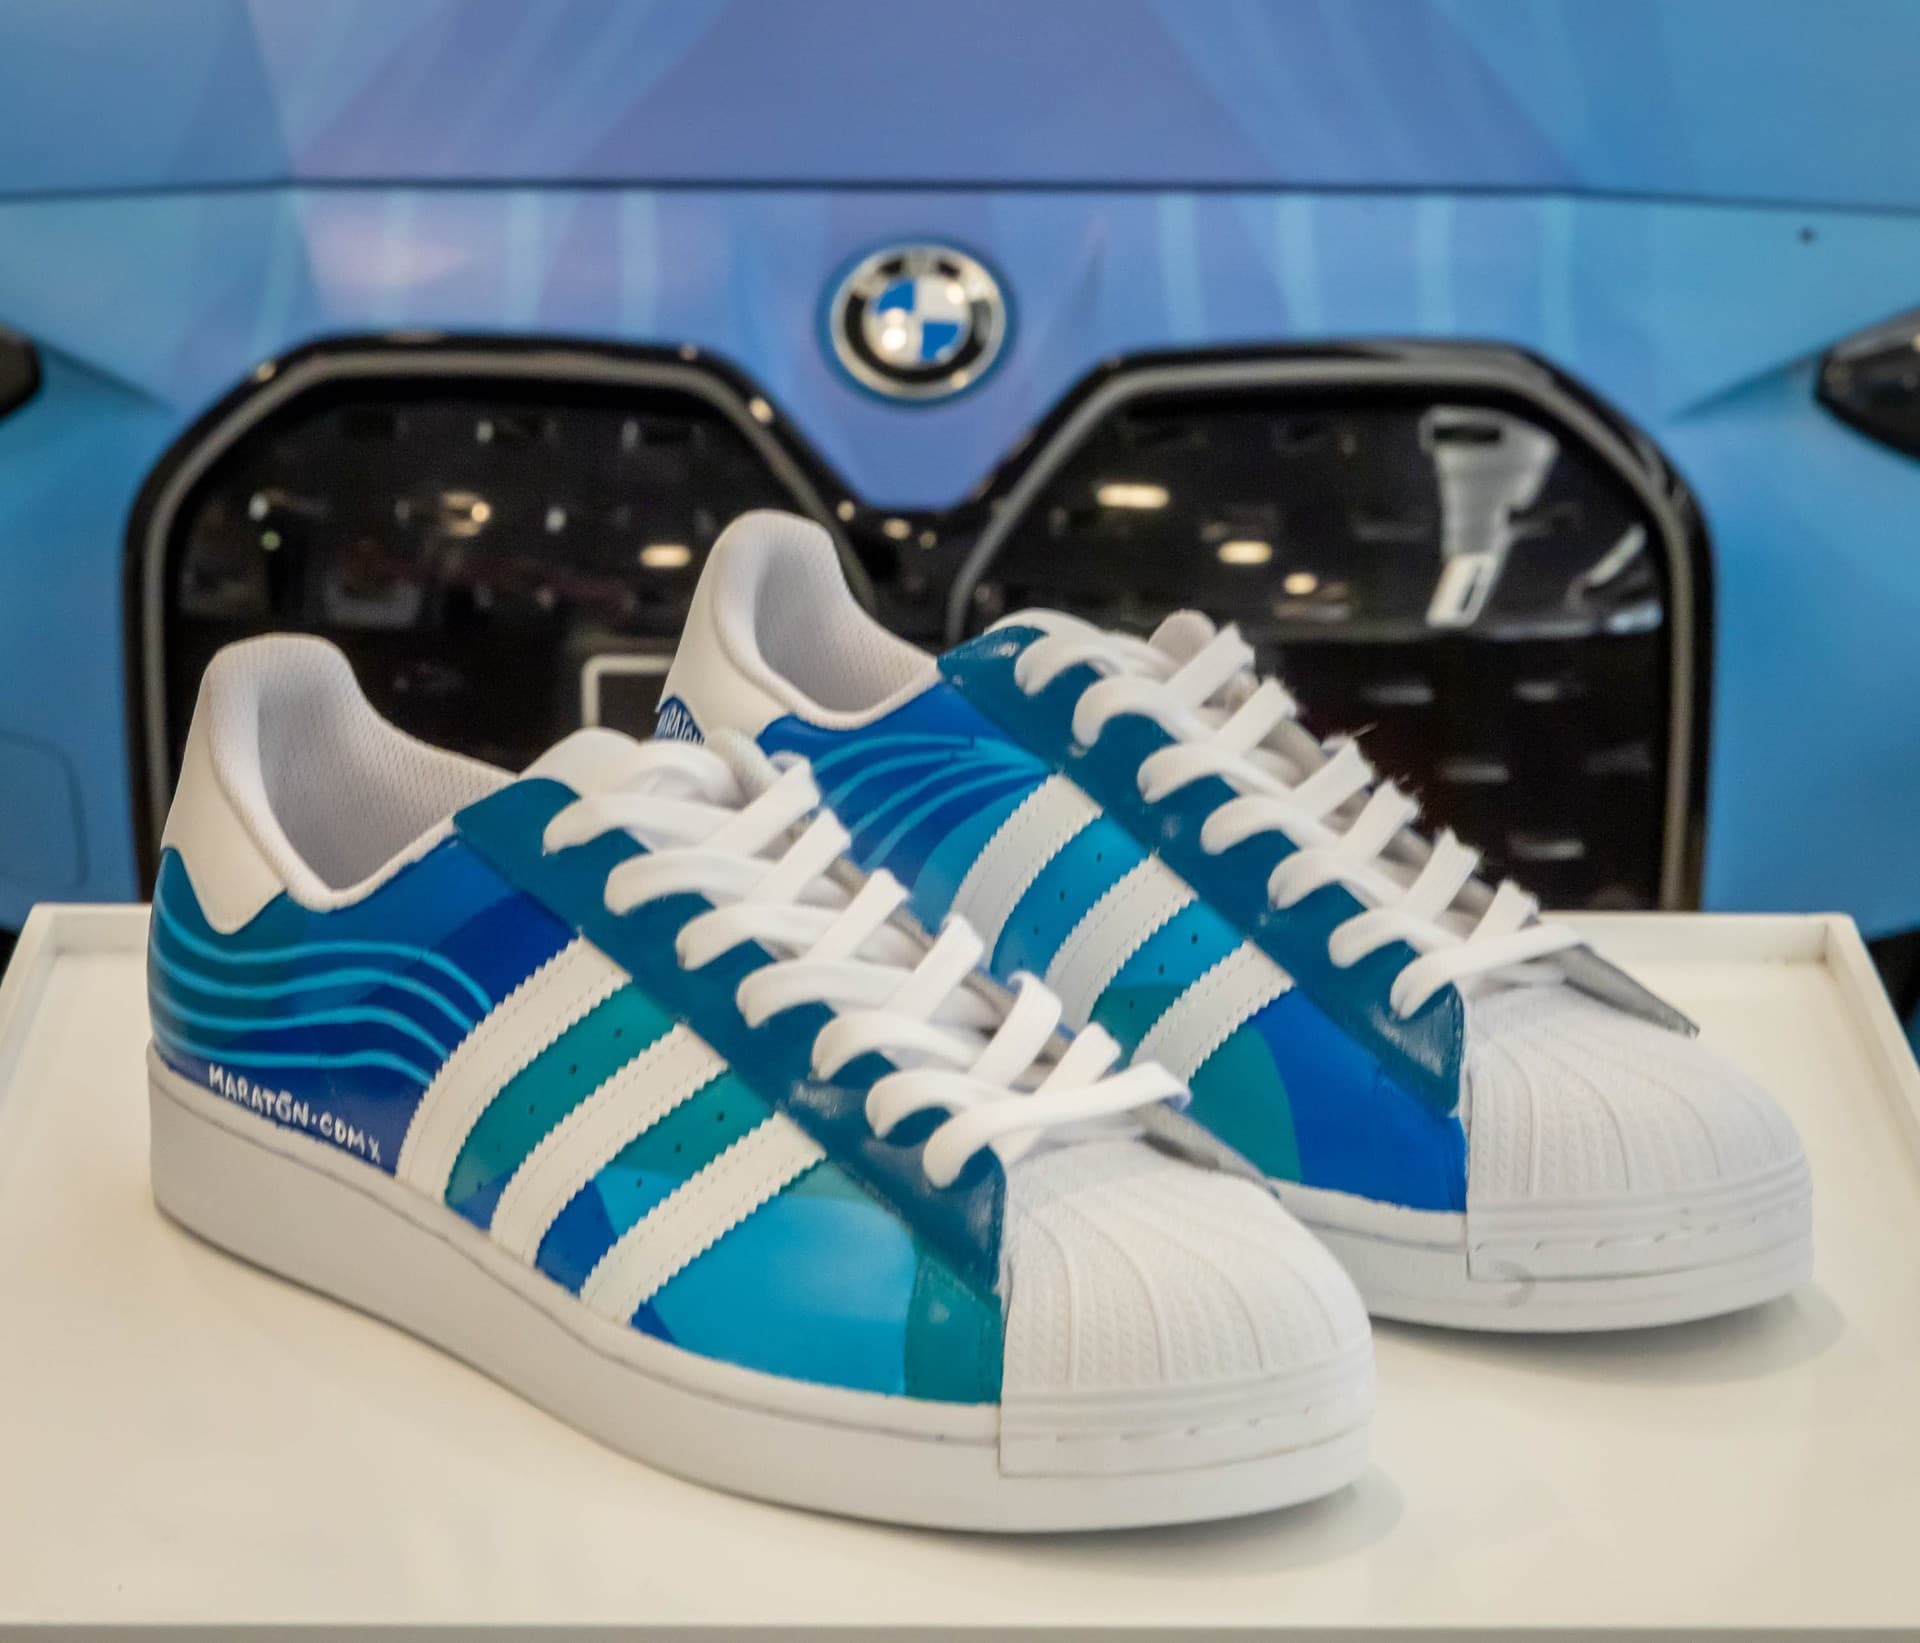 Elementair Abnormaal weggooien BMW x Adidas releases limited edition Superstar tennis sneakers